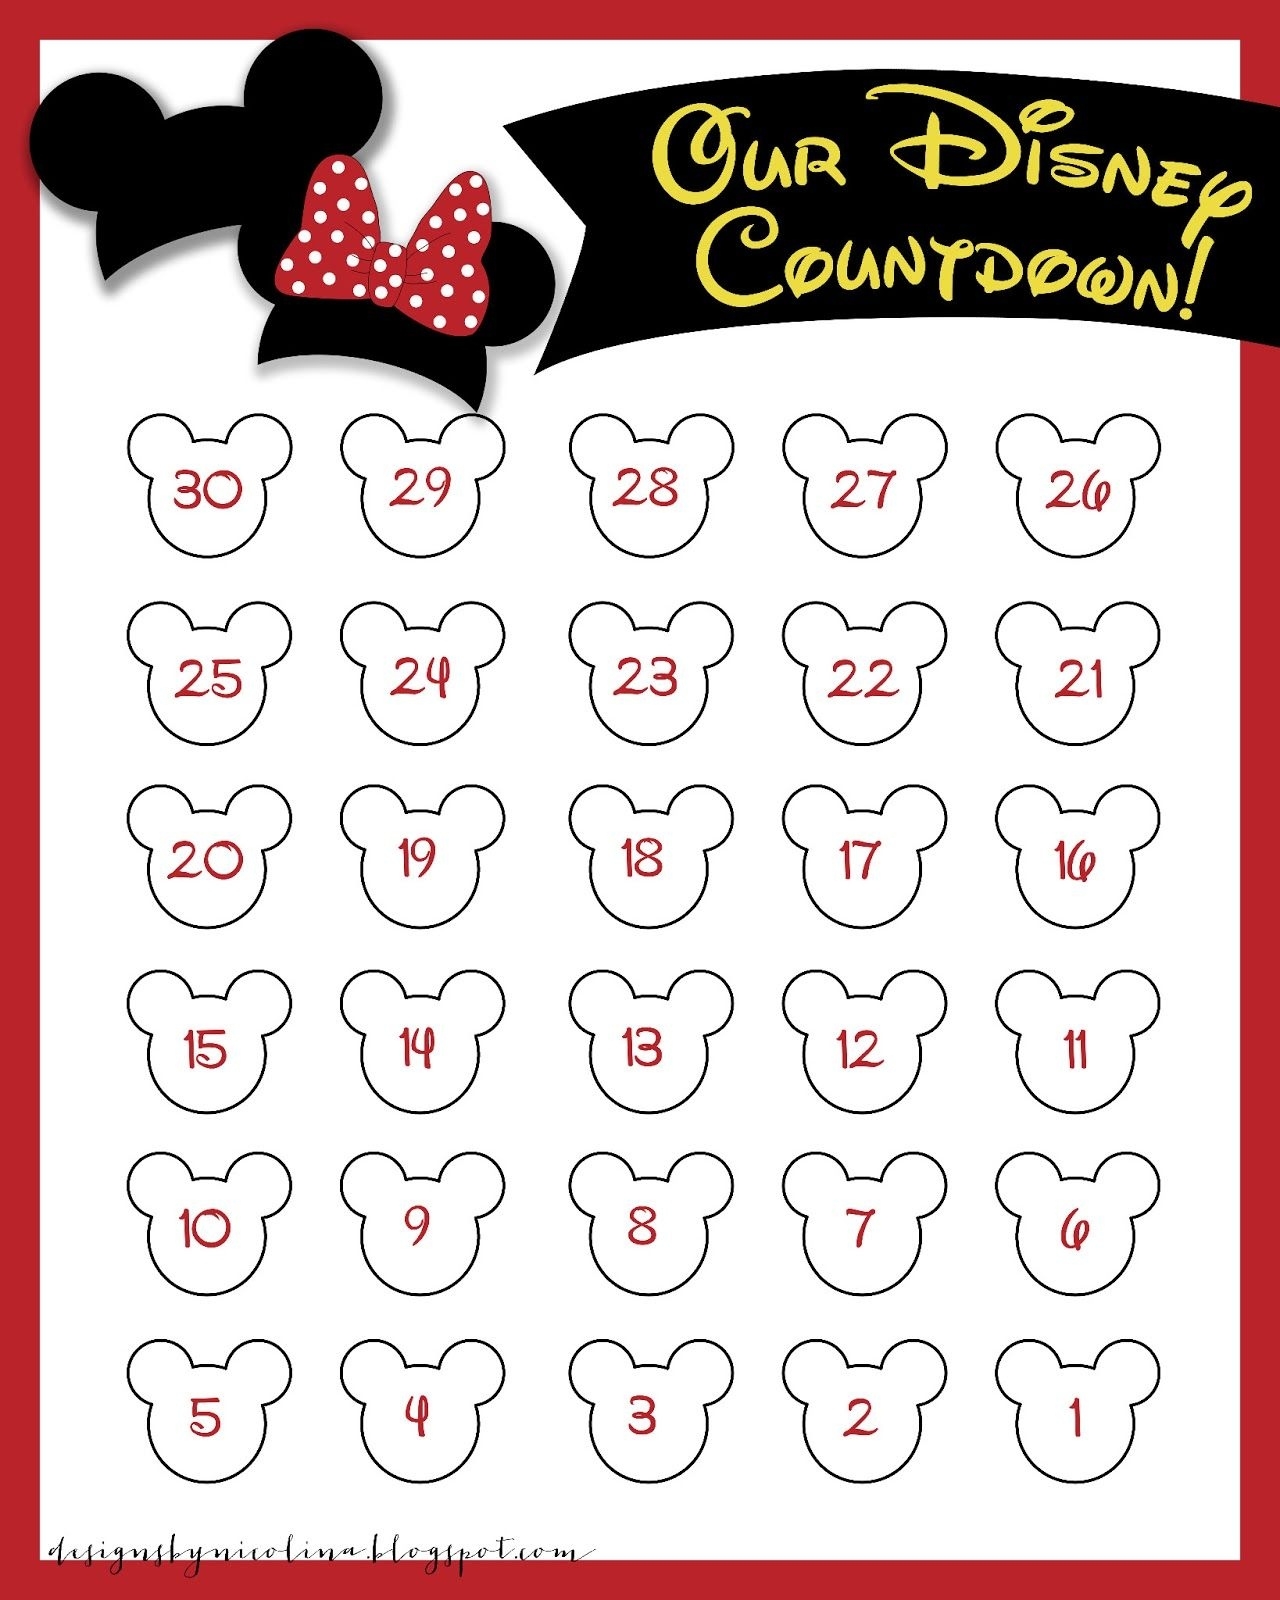 Disneyland Countdown Calendar | Designs By Nicolina: Disney Calendar Countdown To Print